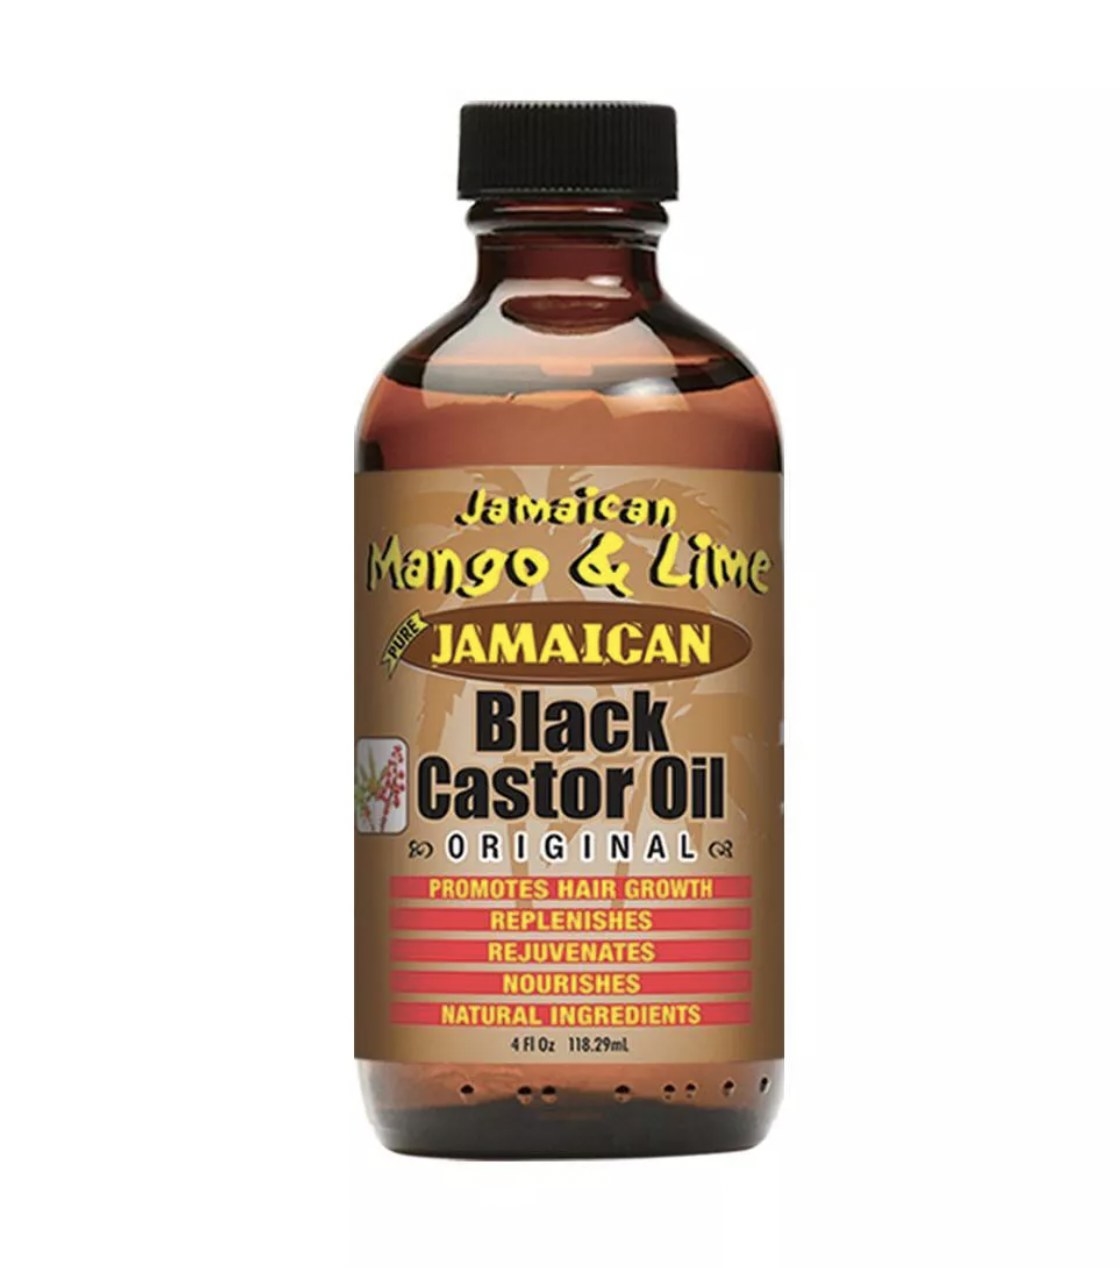 A bottle of Jamaican black castor oil